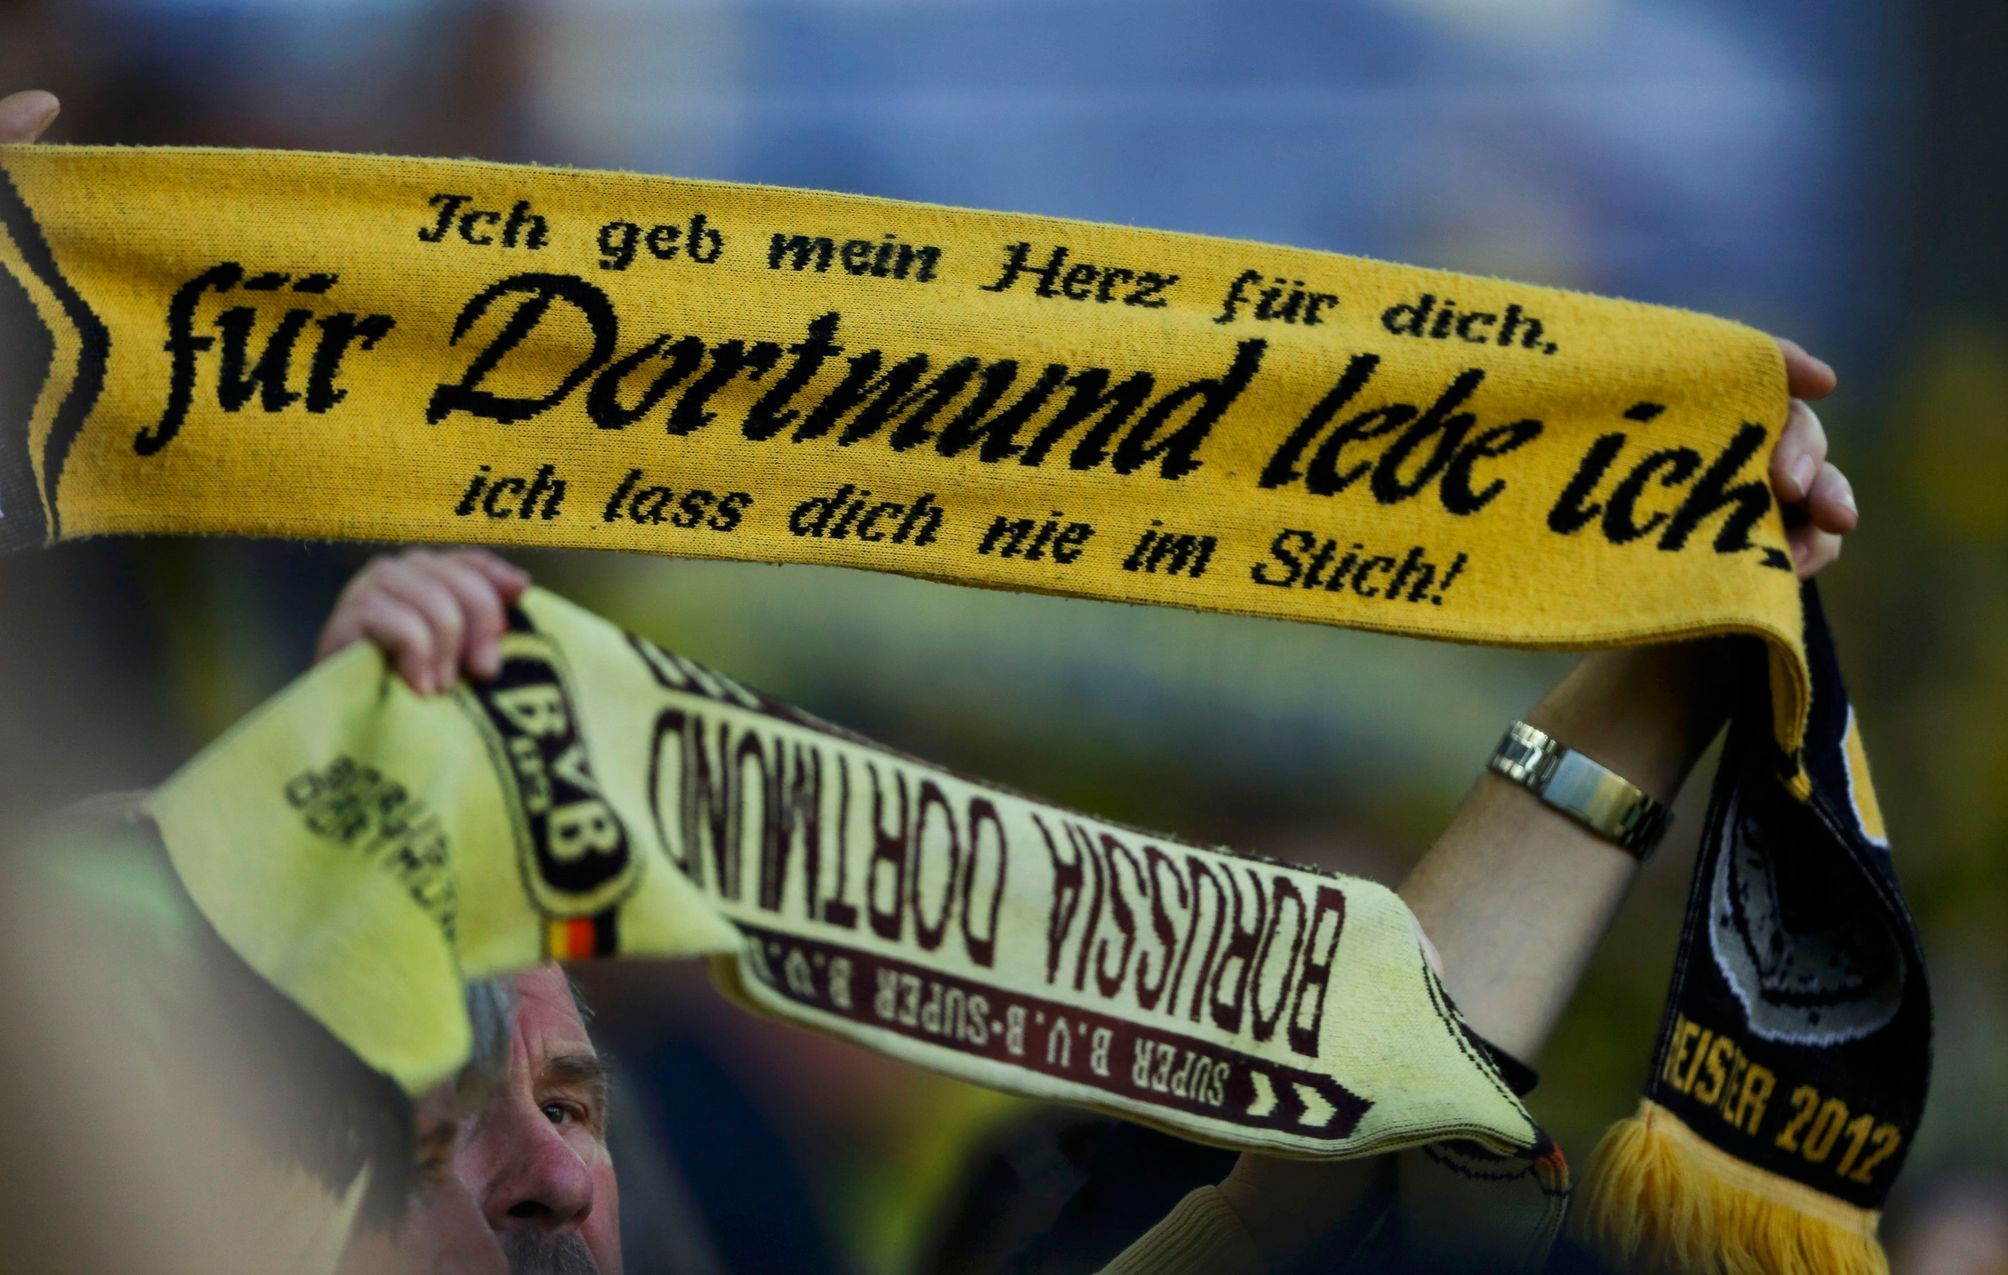 Fotbal, Bundesliga, Dortmund - Bayern Mnichov: fanoušci Dortmundu